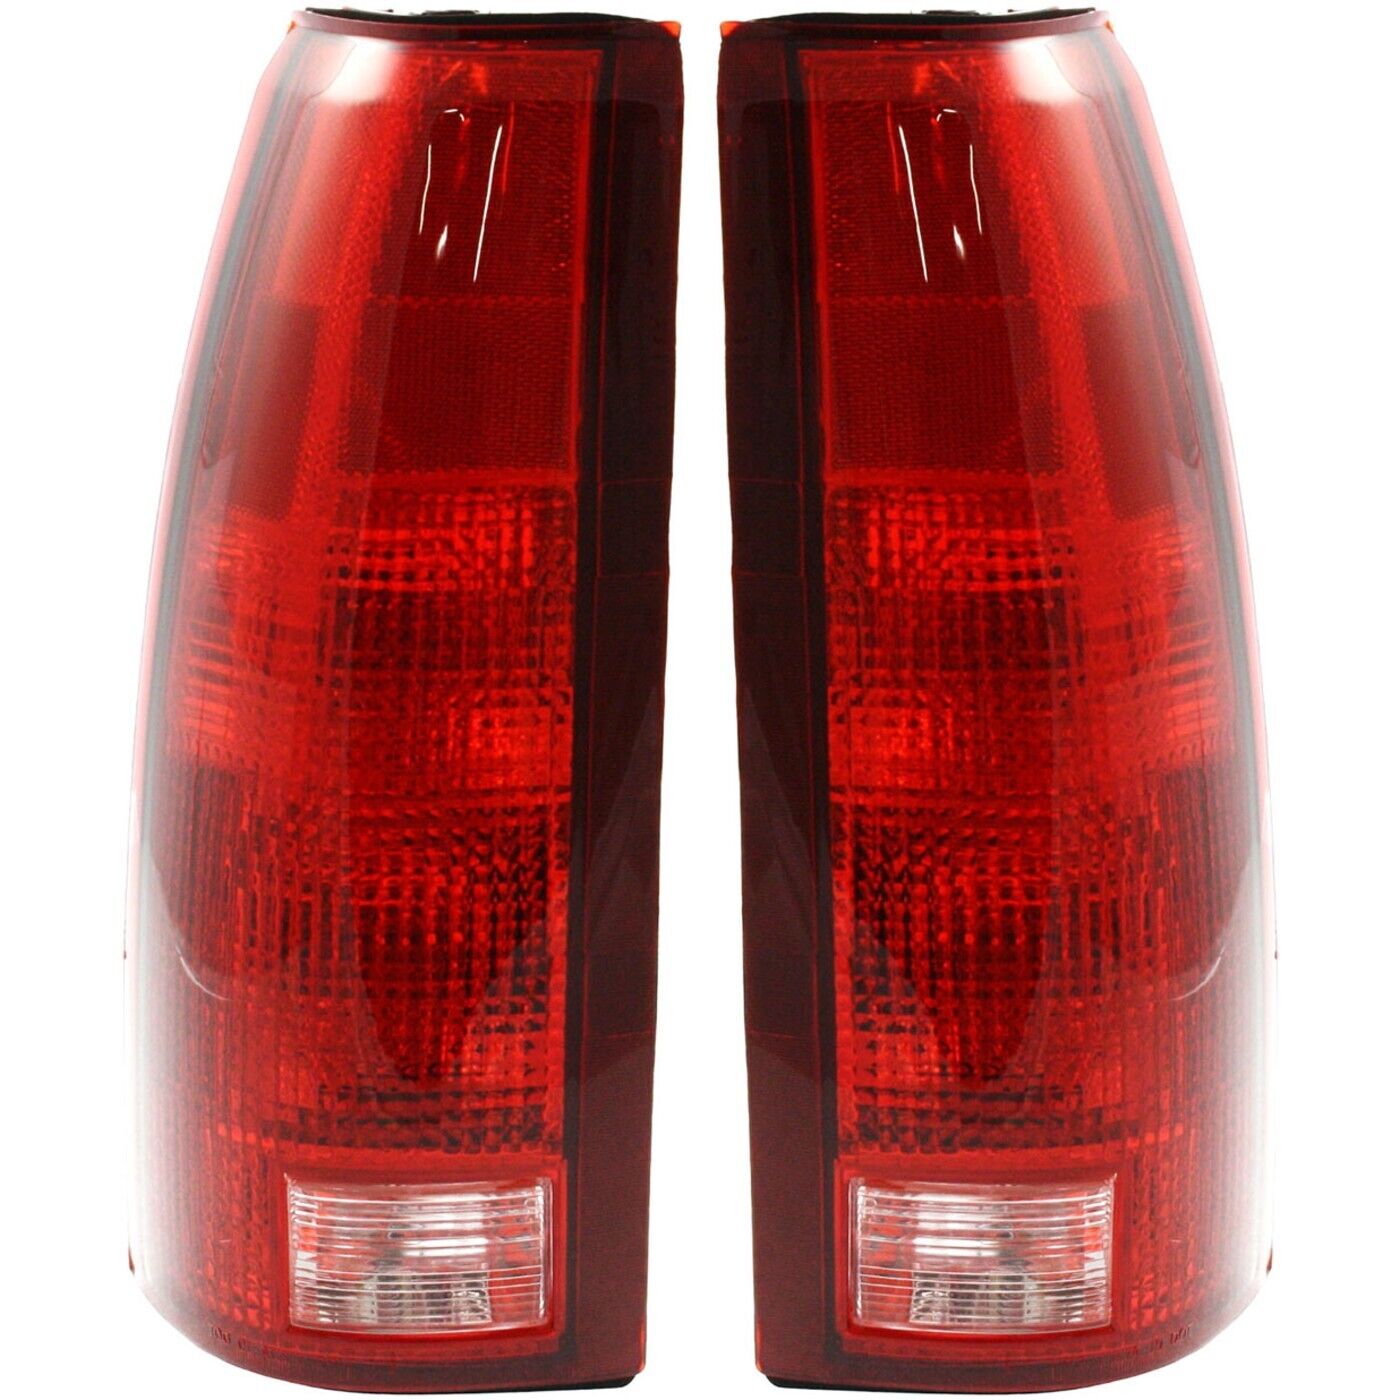 Set of 2 Tail Light For 88-98 Chevy K1500 Silverado LH & RH w/ Bulb